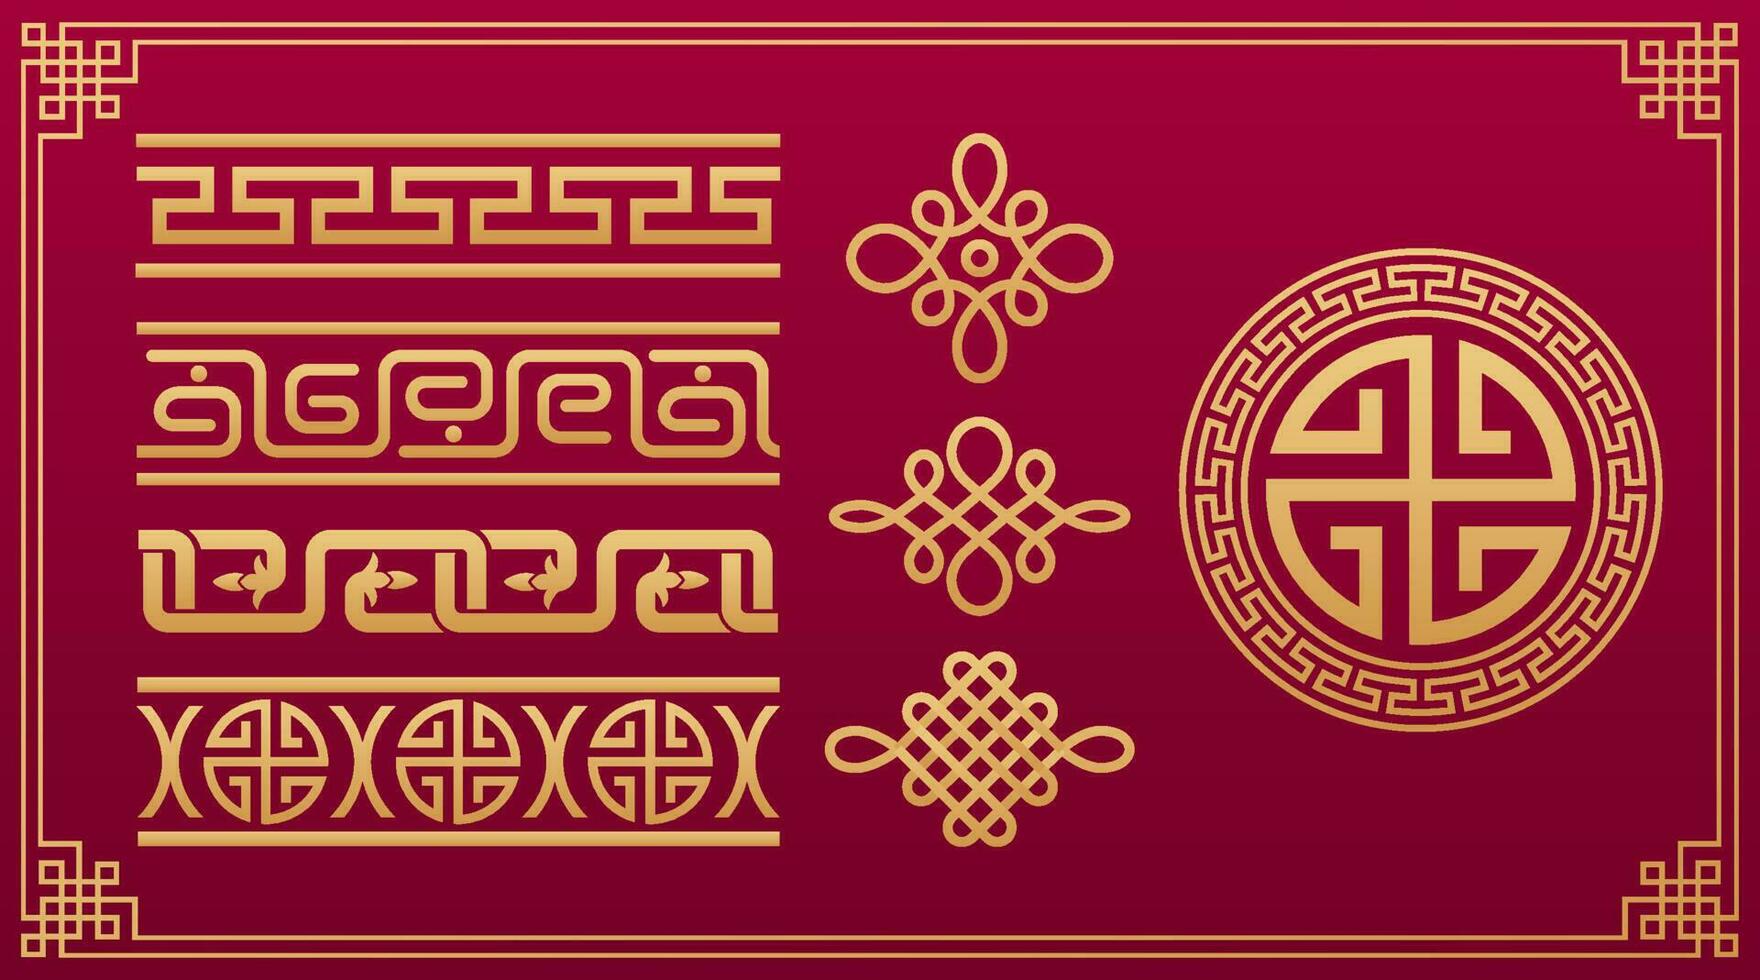 oriental nudos chino modelo. asiático anudamiento, asiático decorativo geométrico ornamento. chino y japonés vector geométrico y nodo oro modelo aislado en rojo antecedentes.